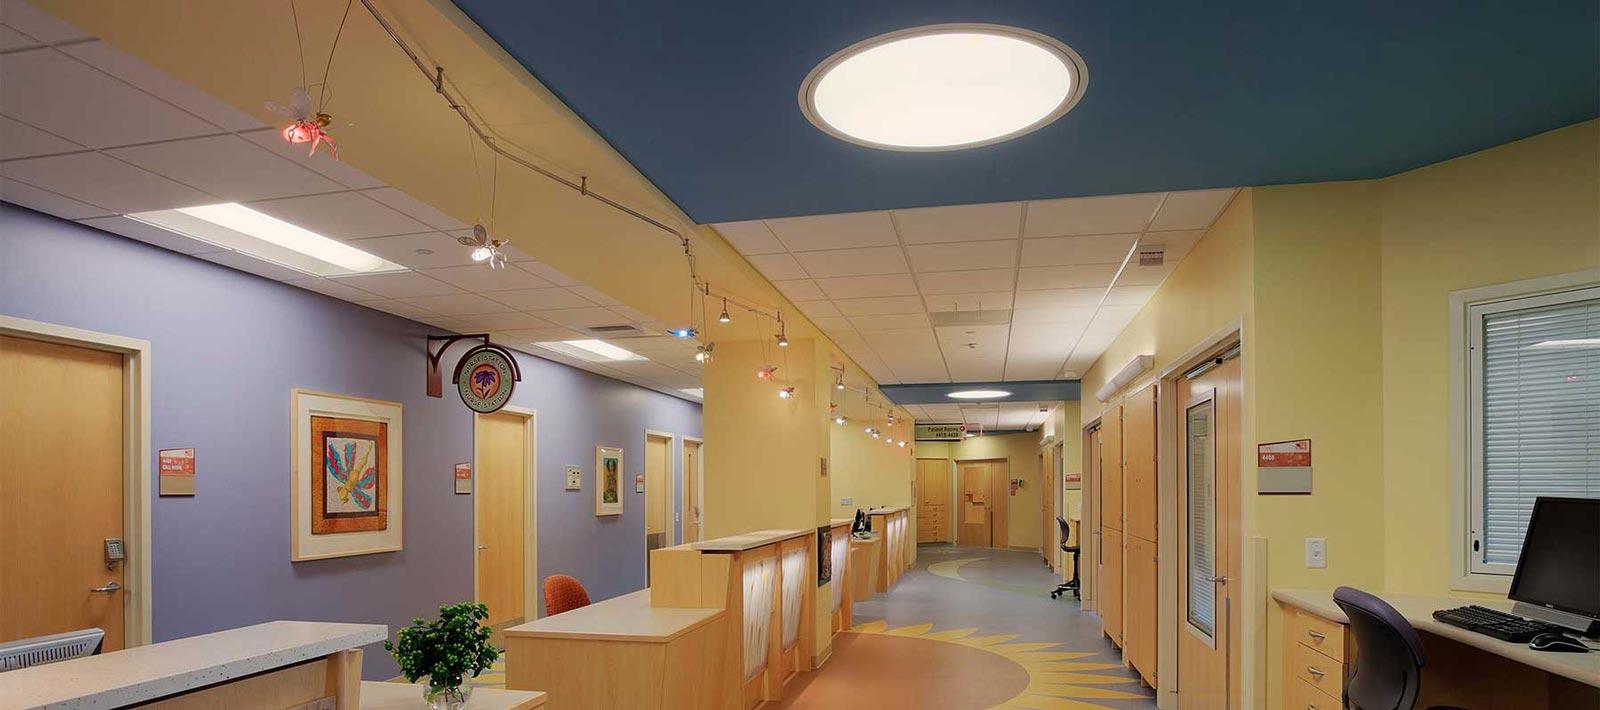 American Family Children's Hospital Corridor Skydome